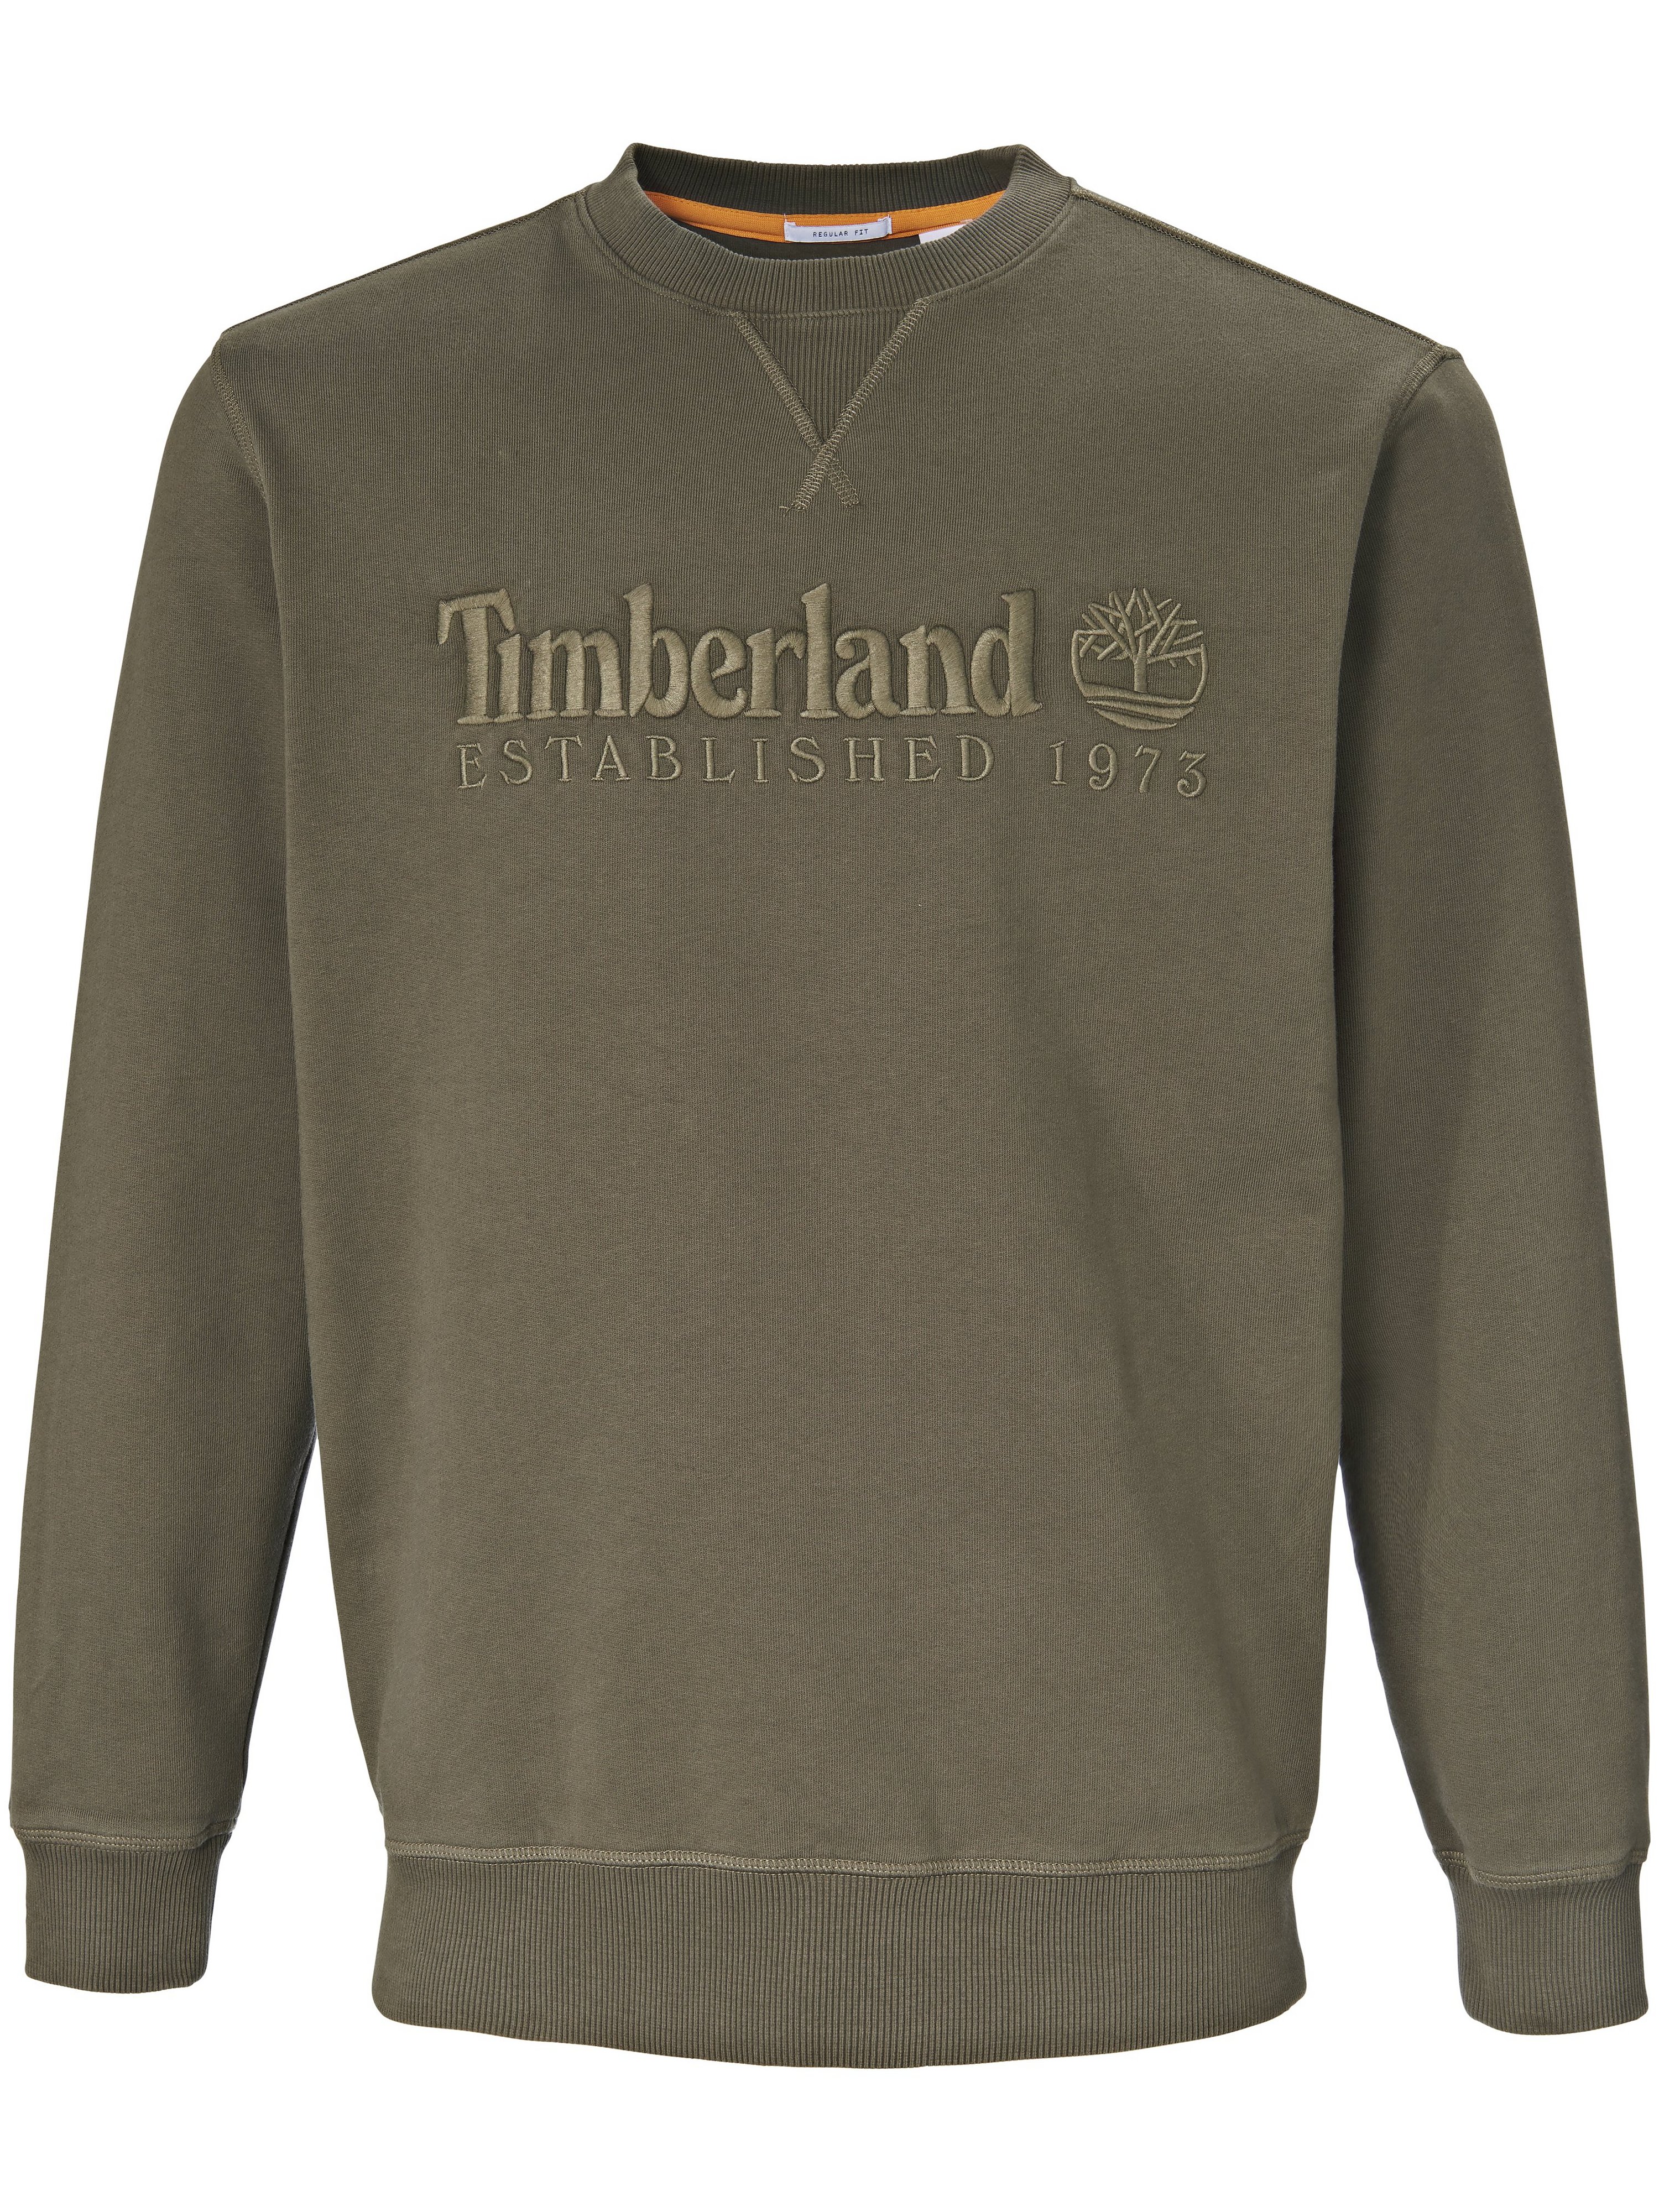 Sweatshirt Timberland grün Größe: 54